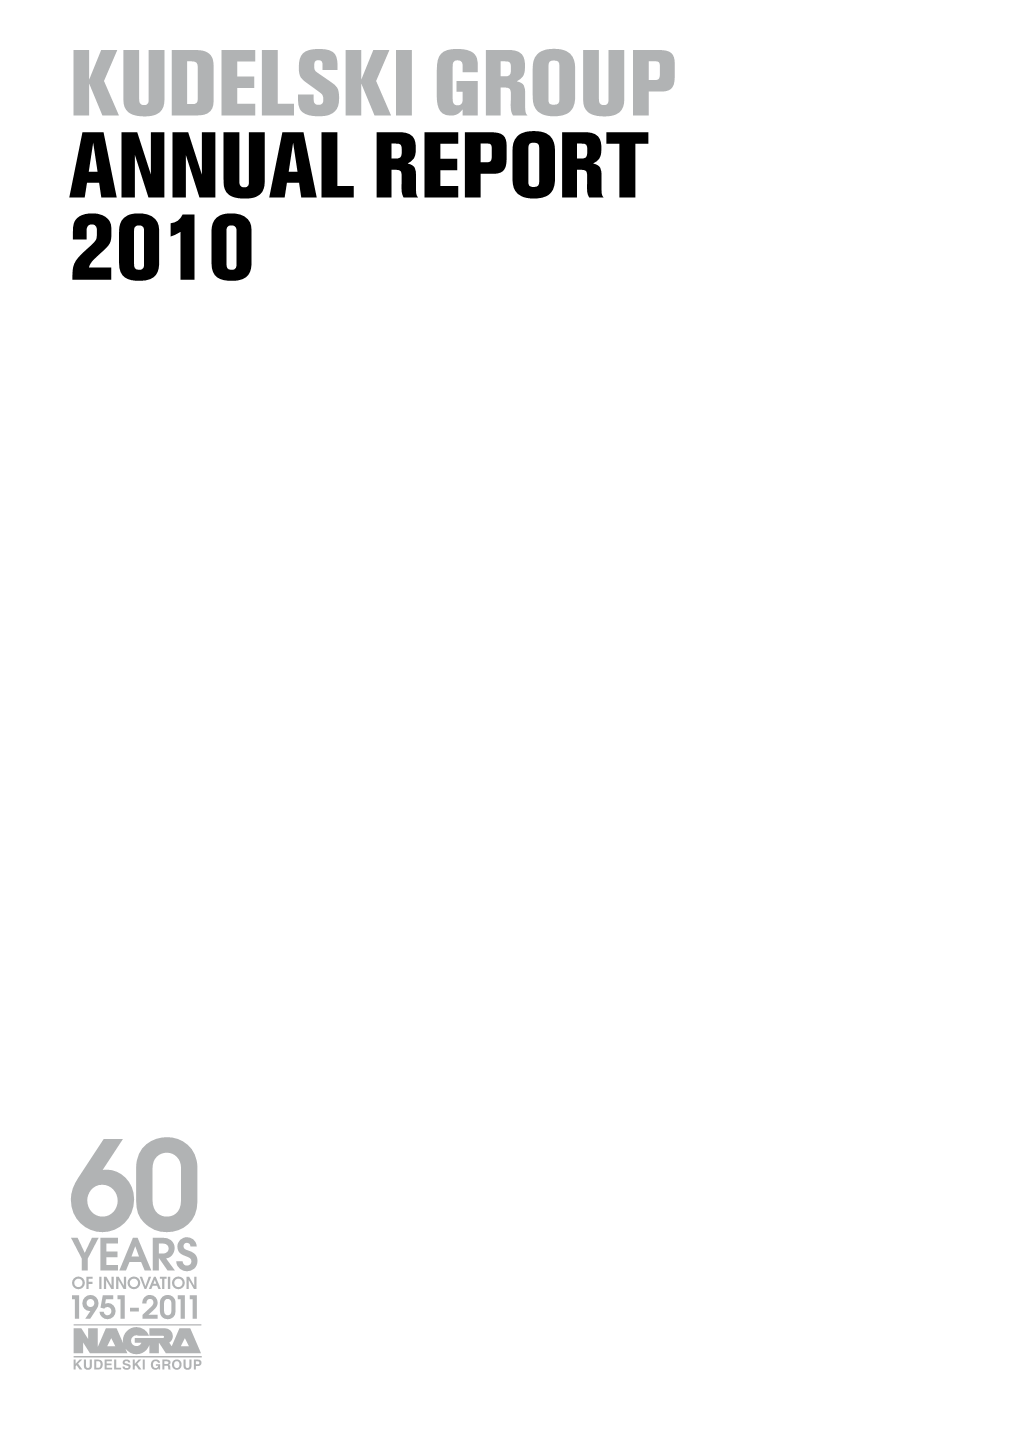 KUDELSKI GROUP Annual Report 2010 Key Figures